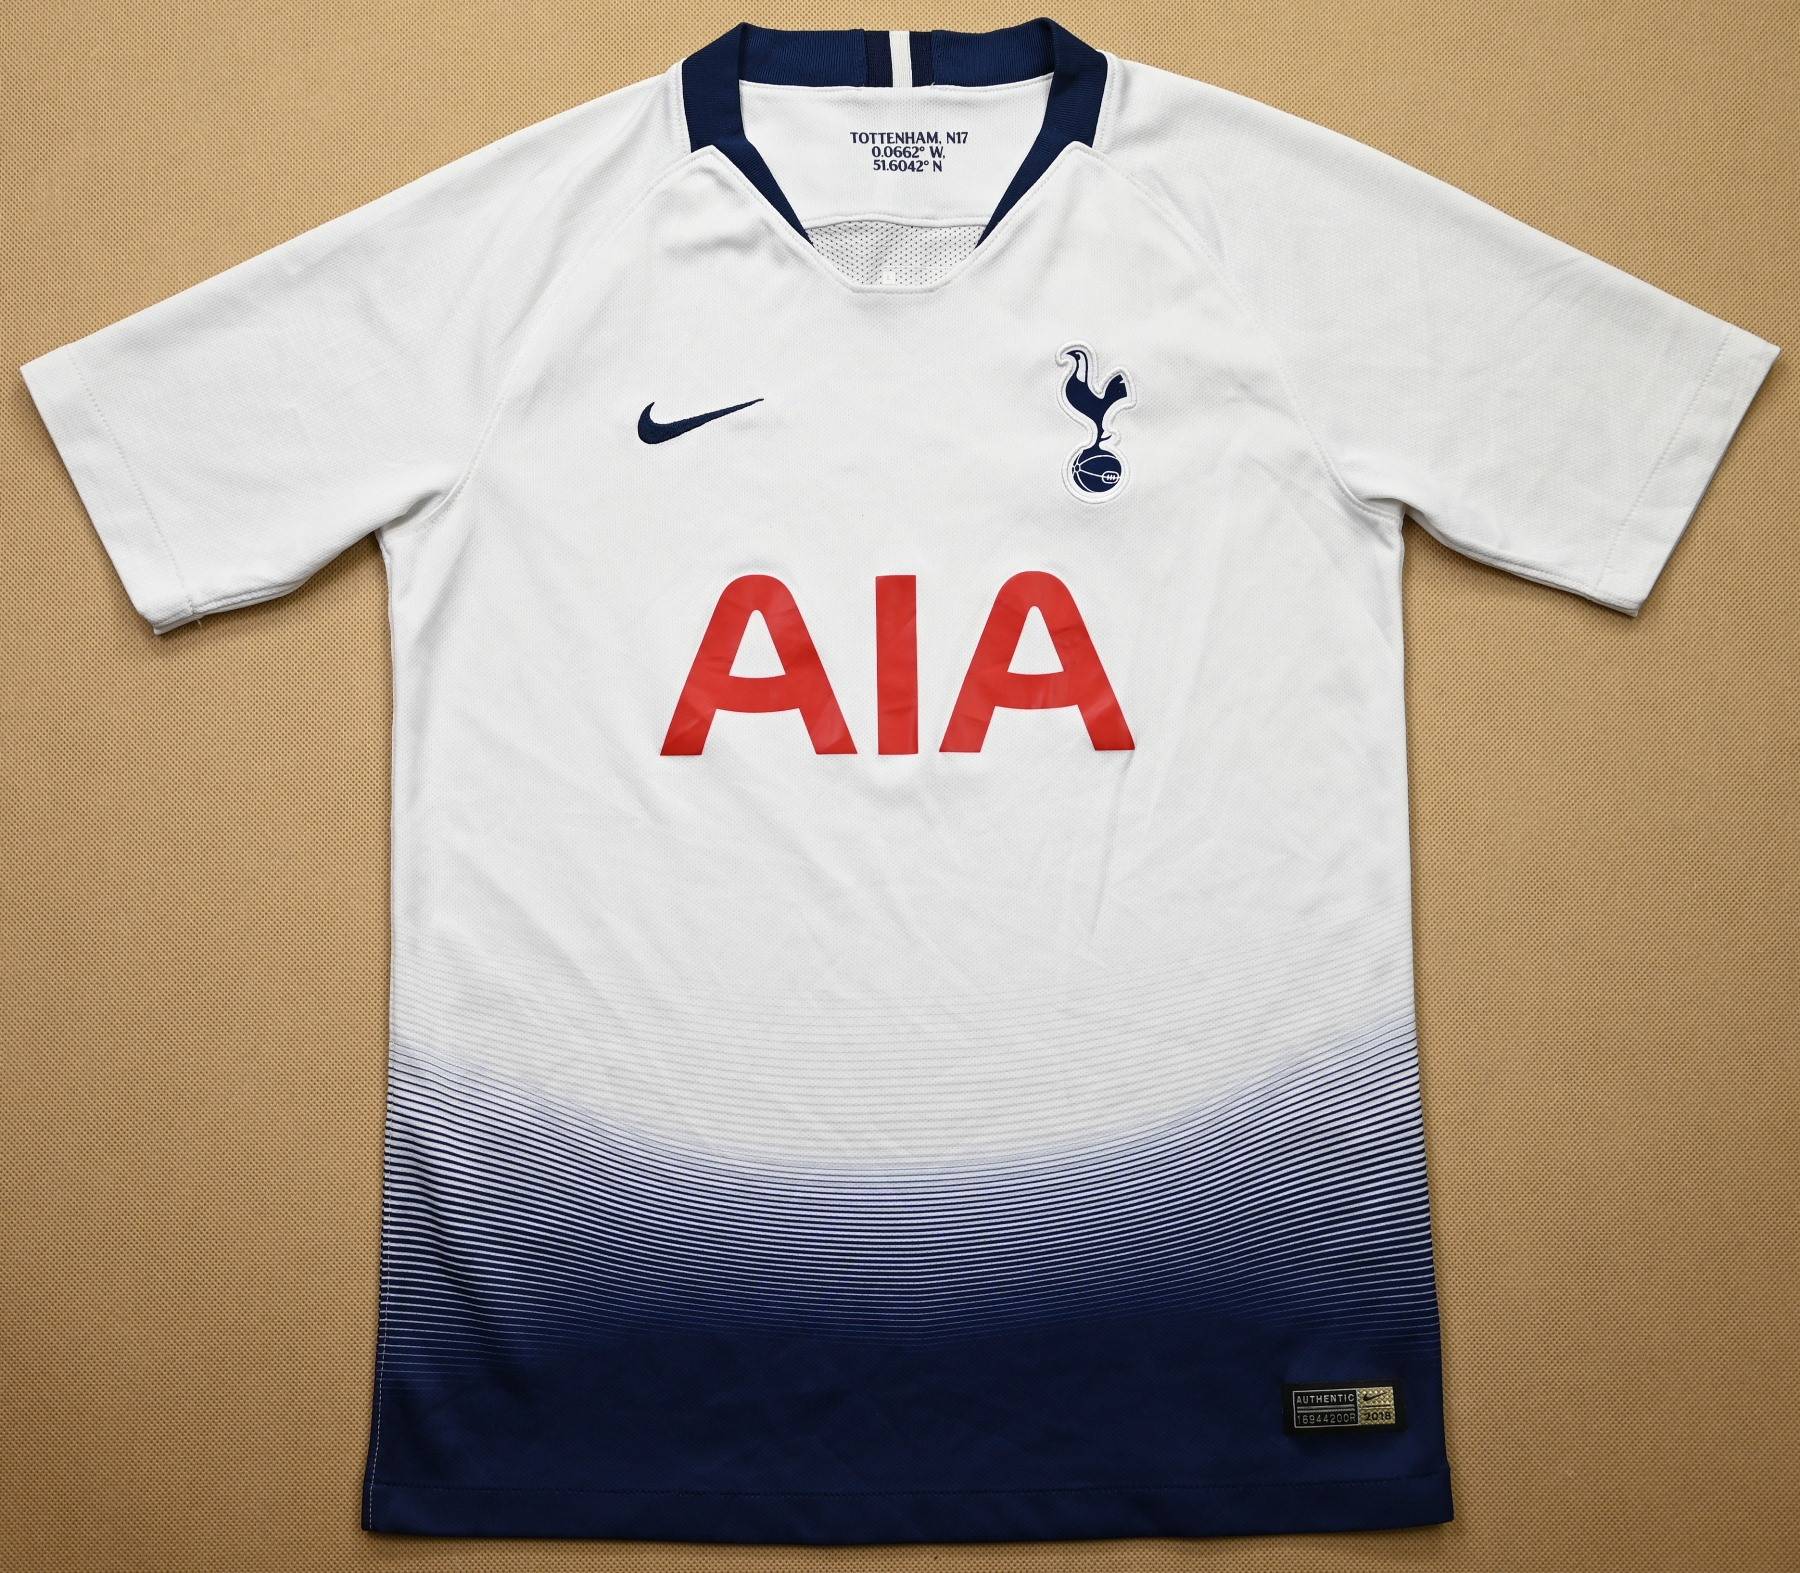 Tottenham Hotspur Third football shirt 2018 - 2019. Sponsored by AIA